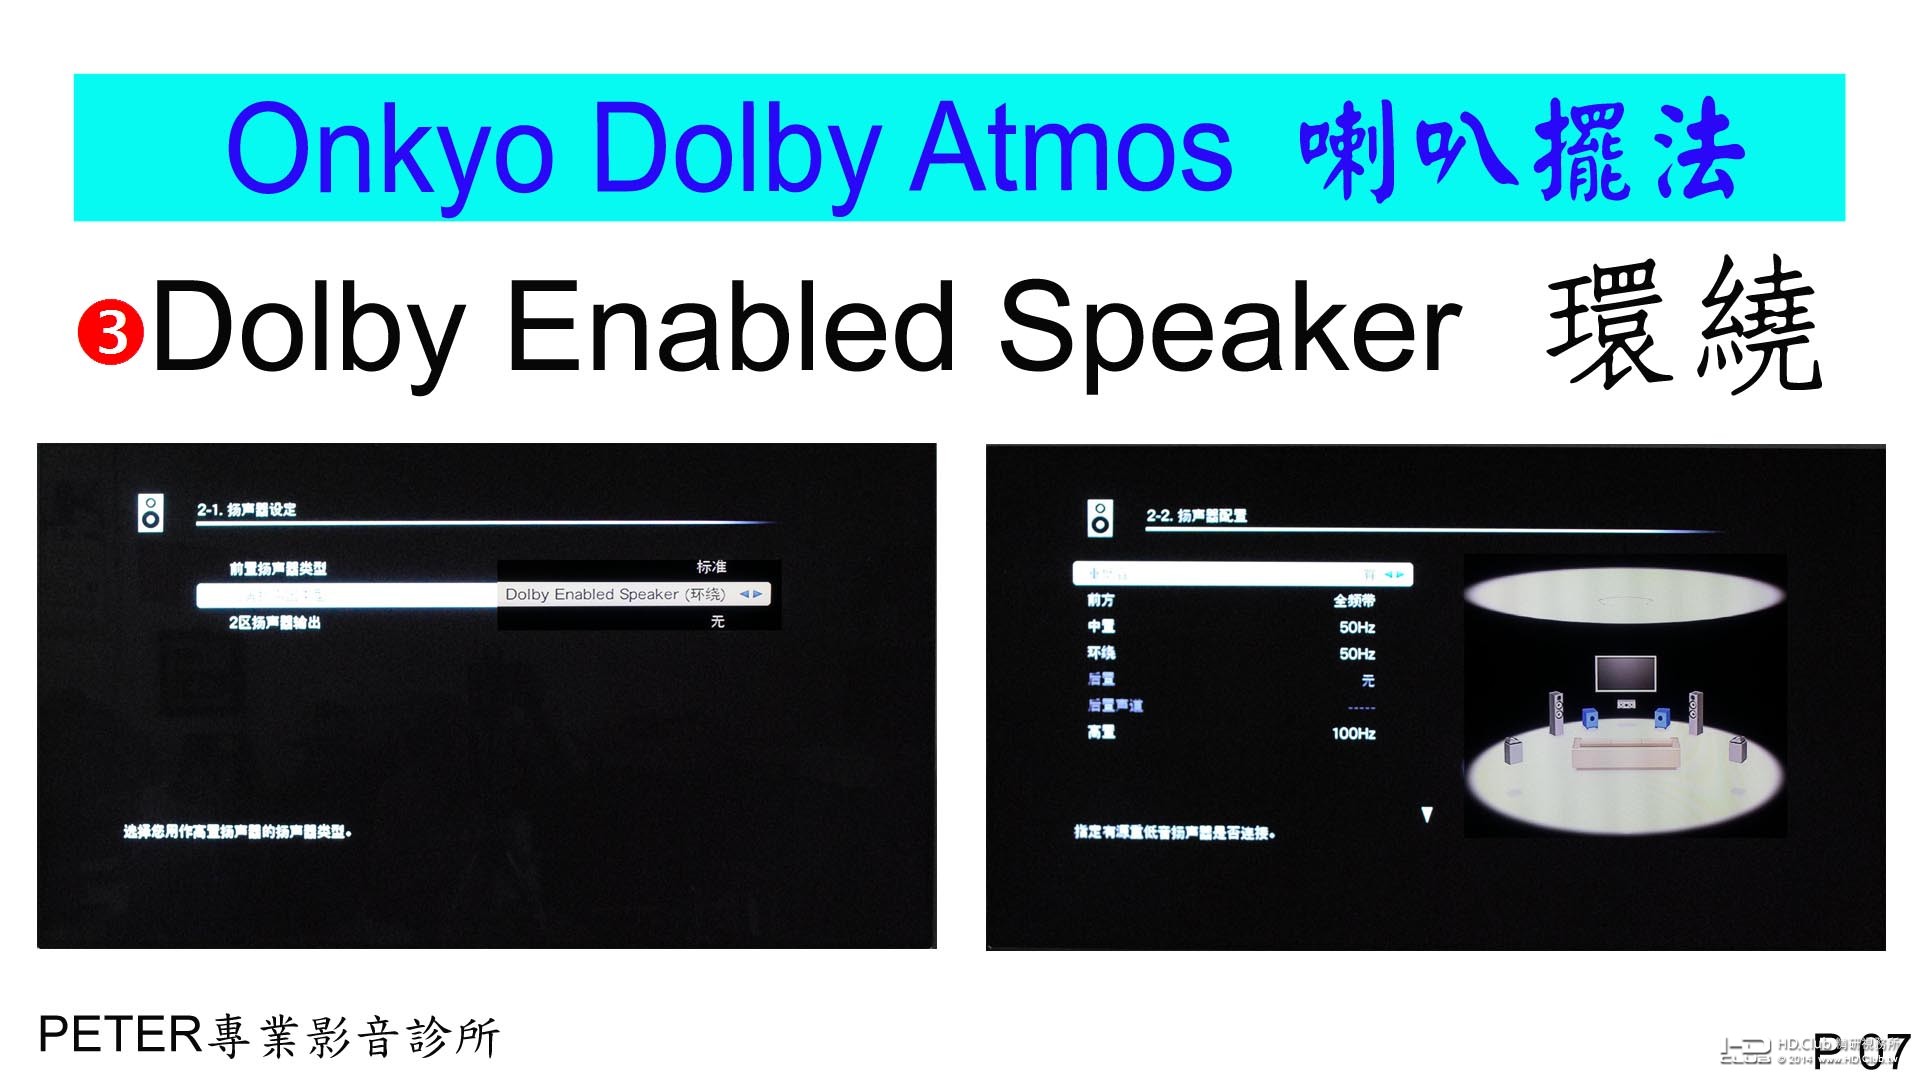 07 Onkyo Dolby Atmos 喇叭擺法.jpg